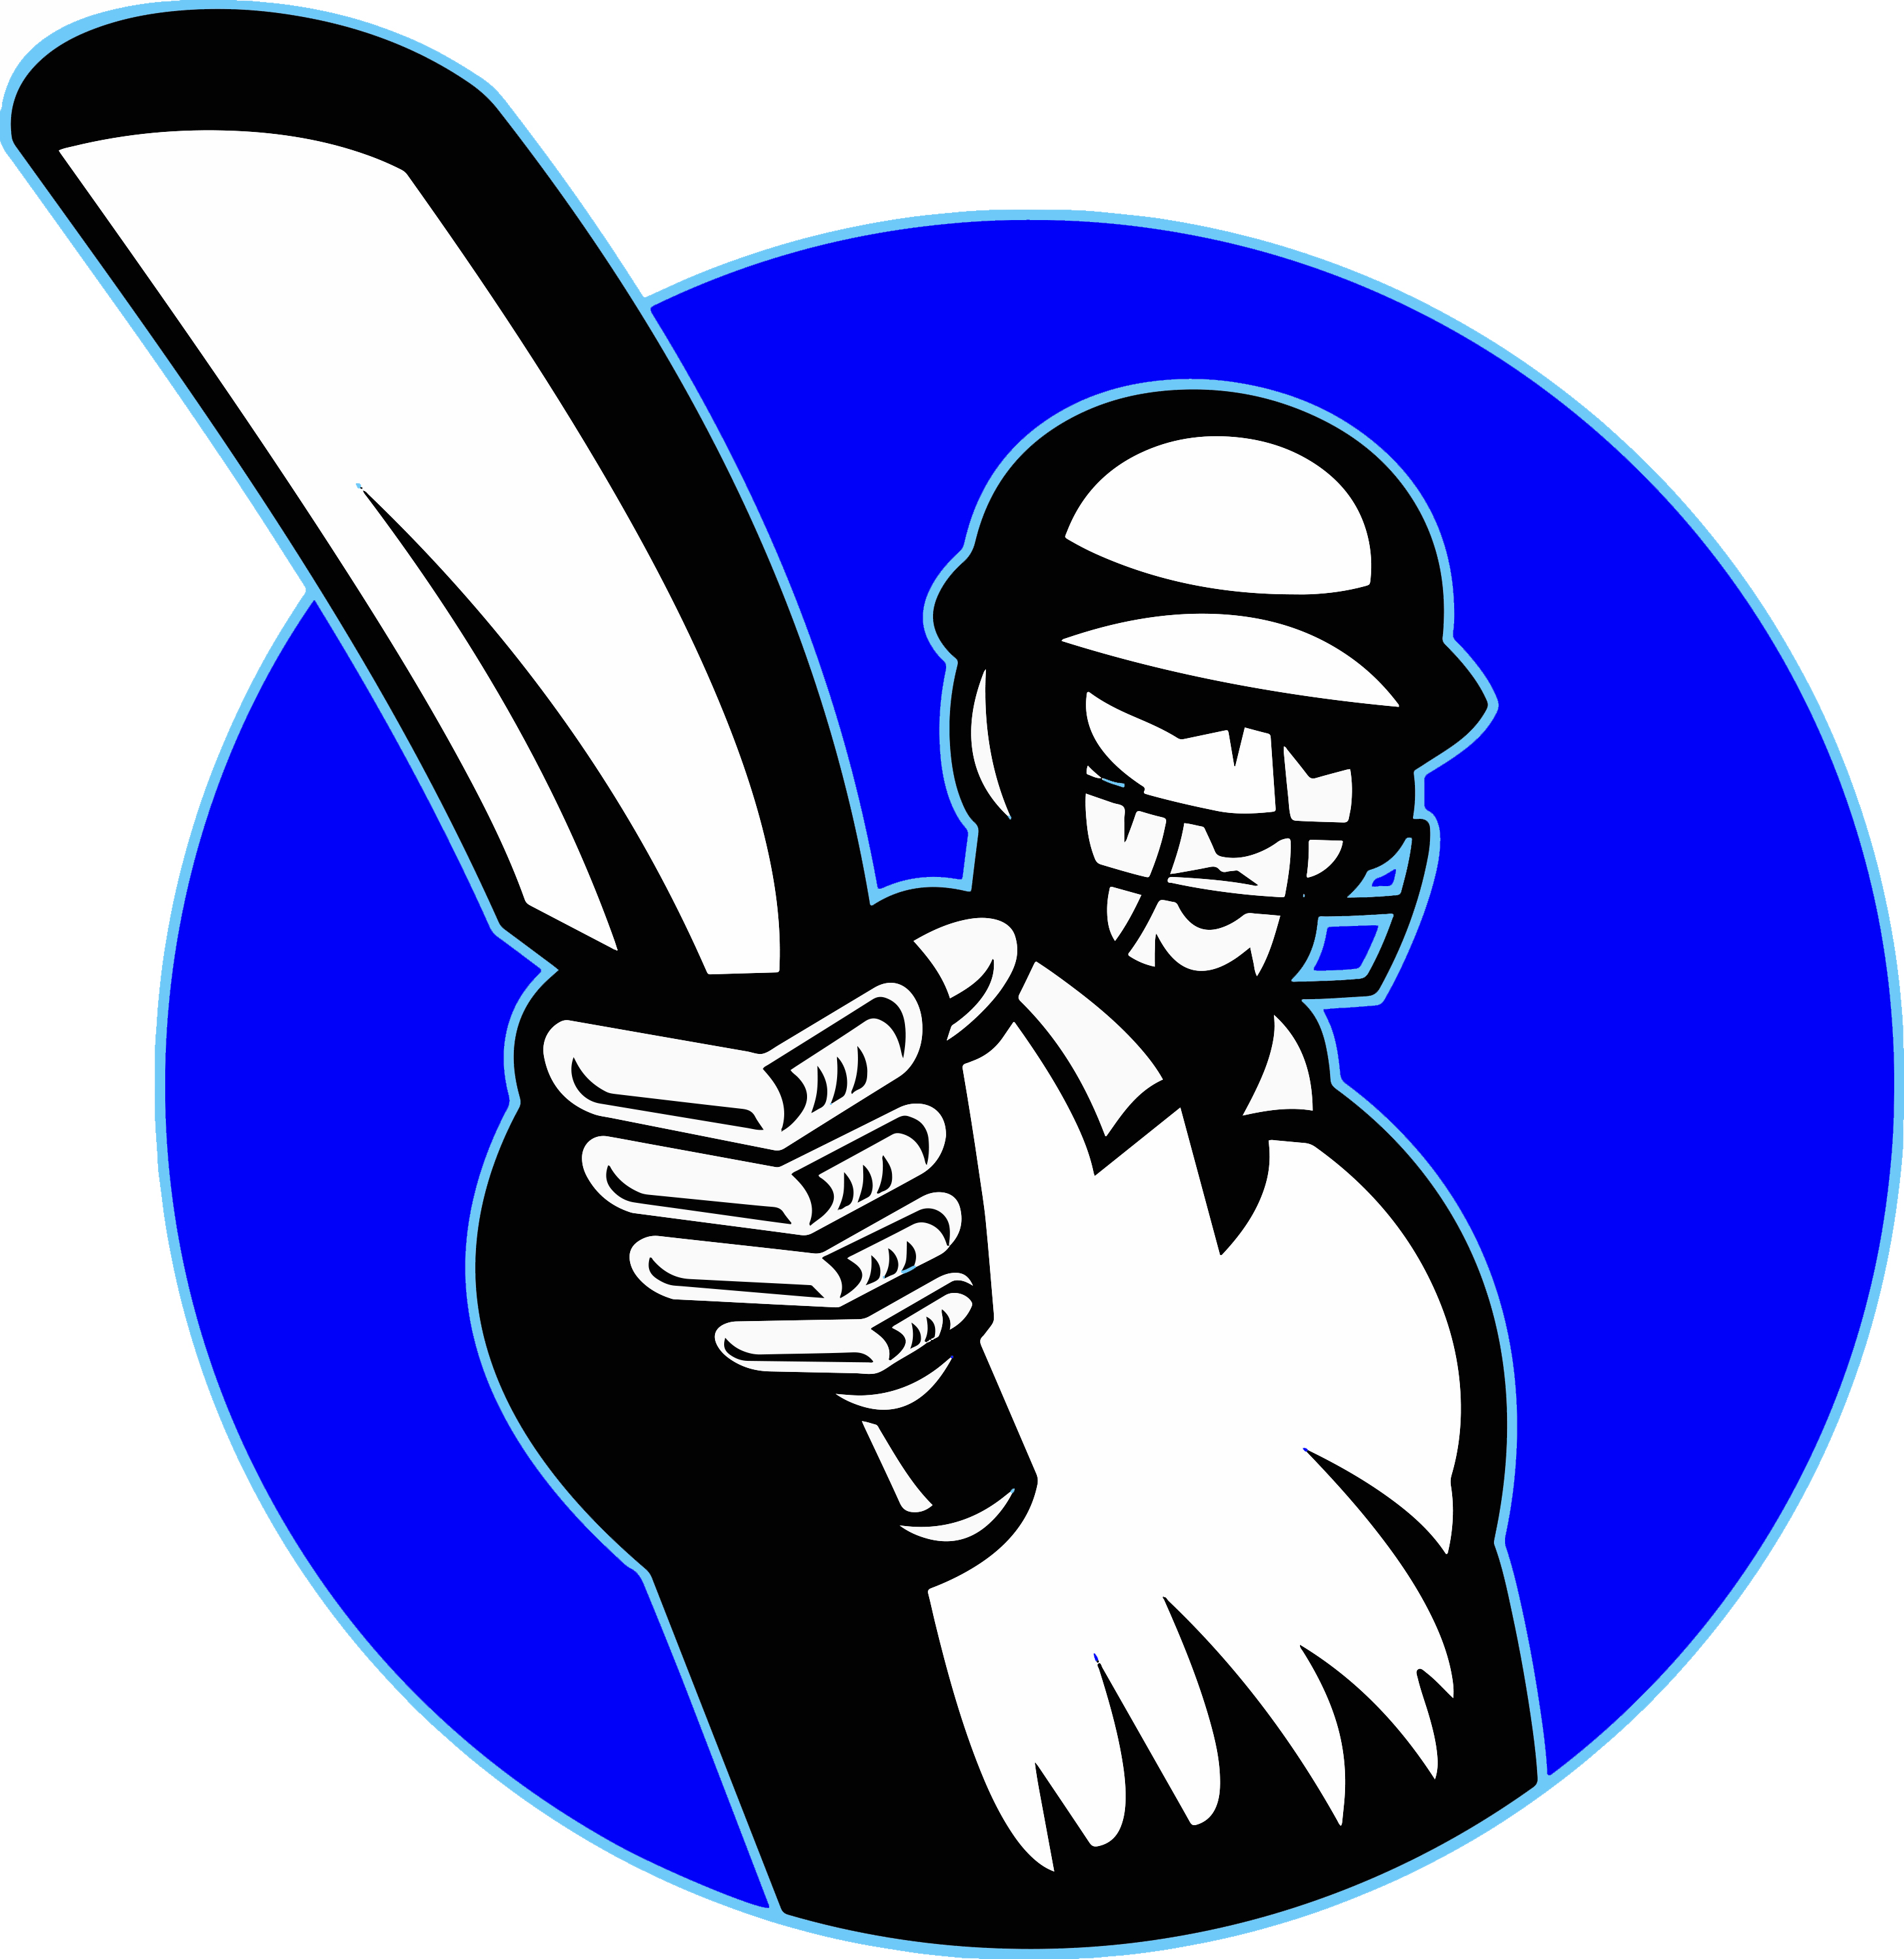 Cricket player image.jpg